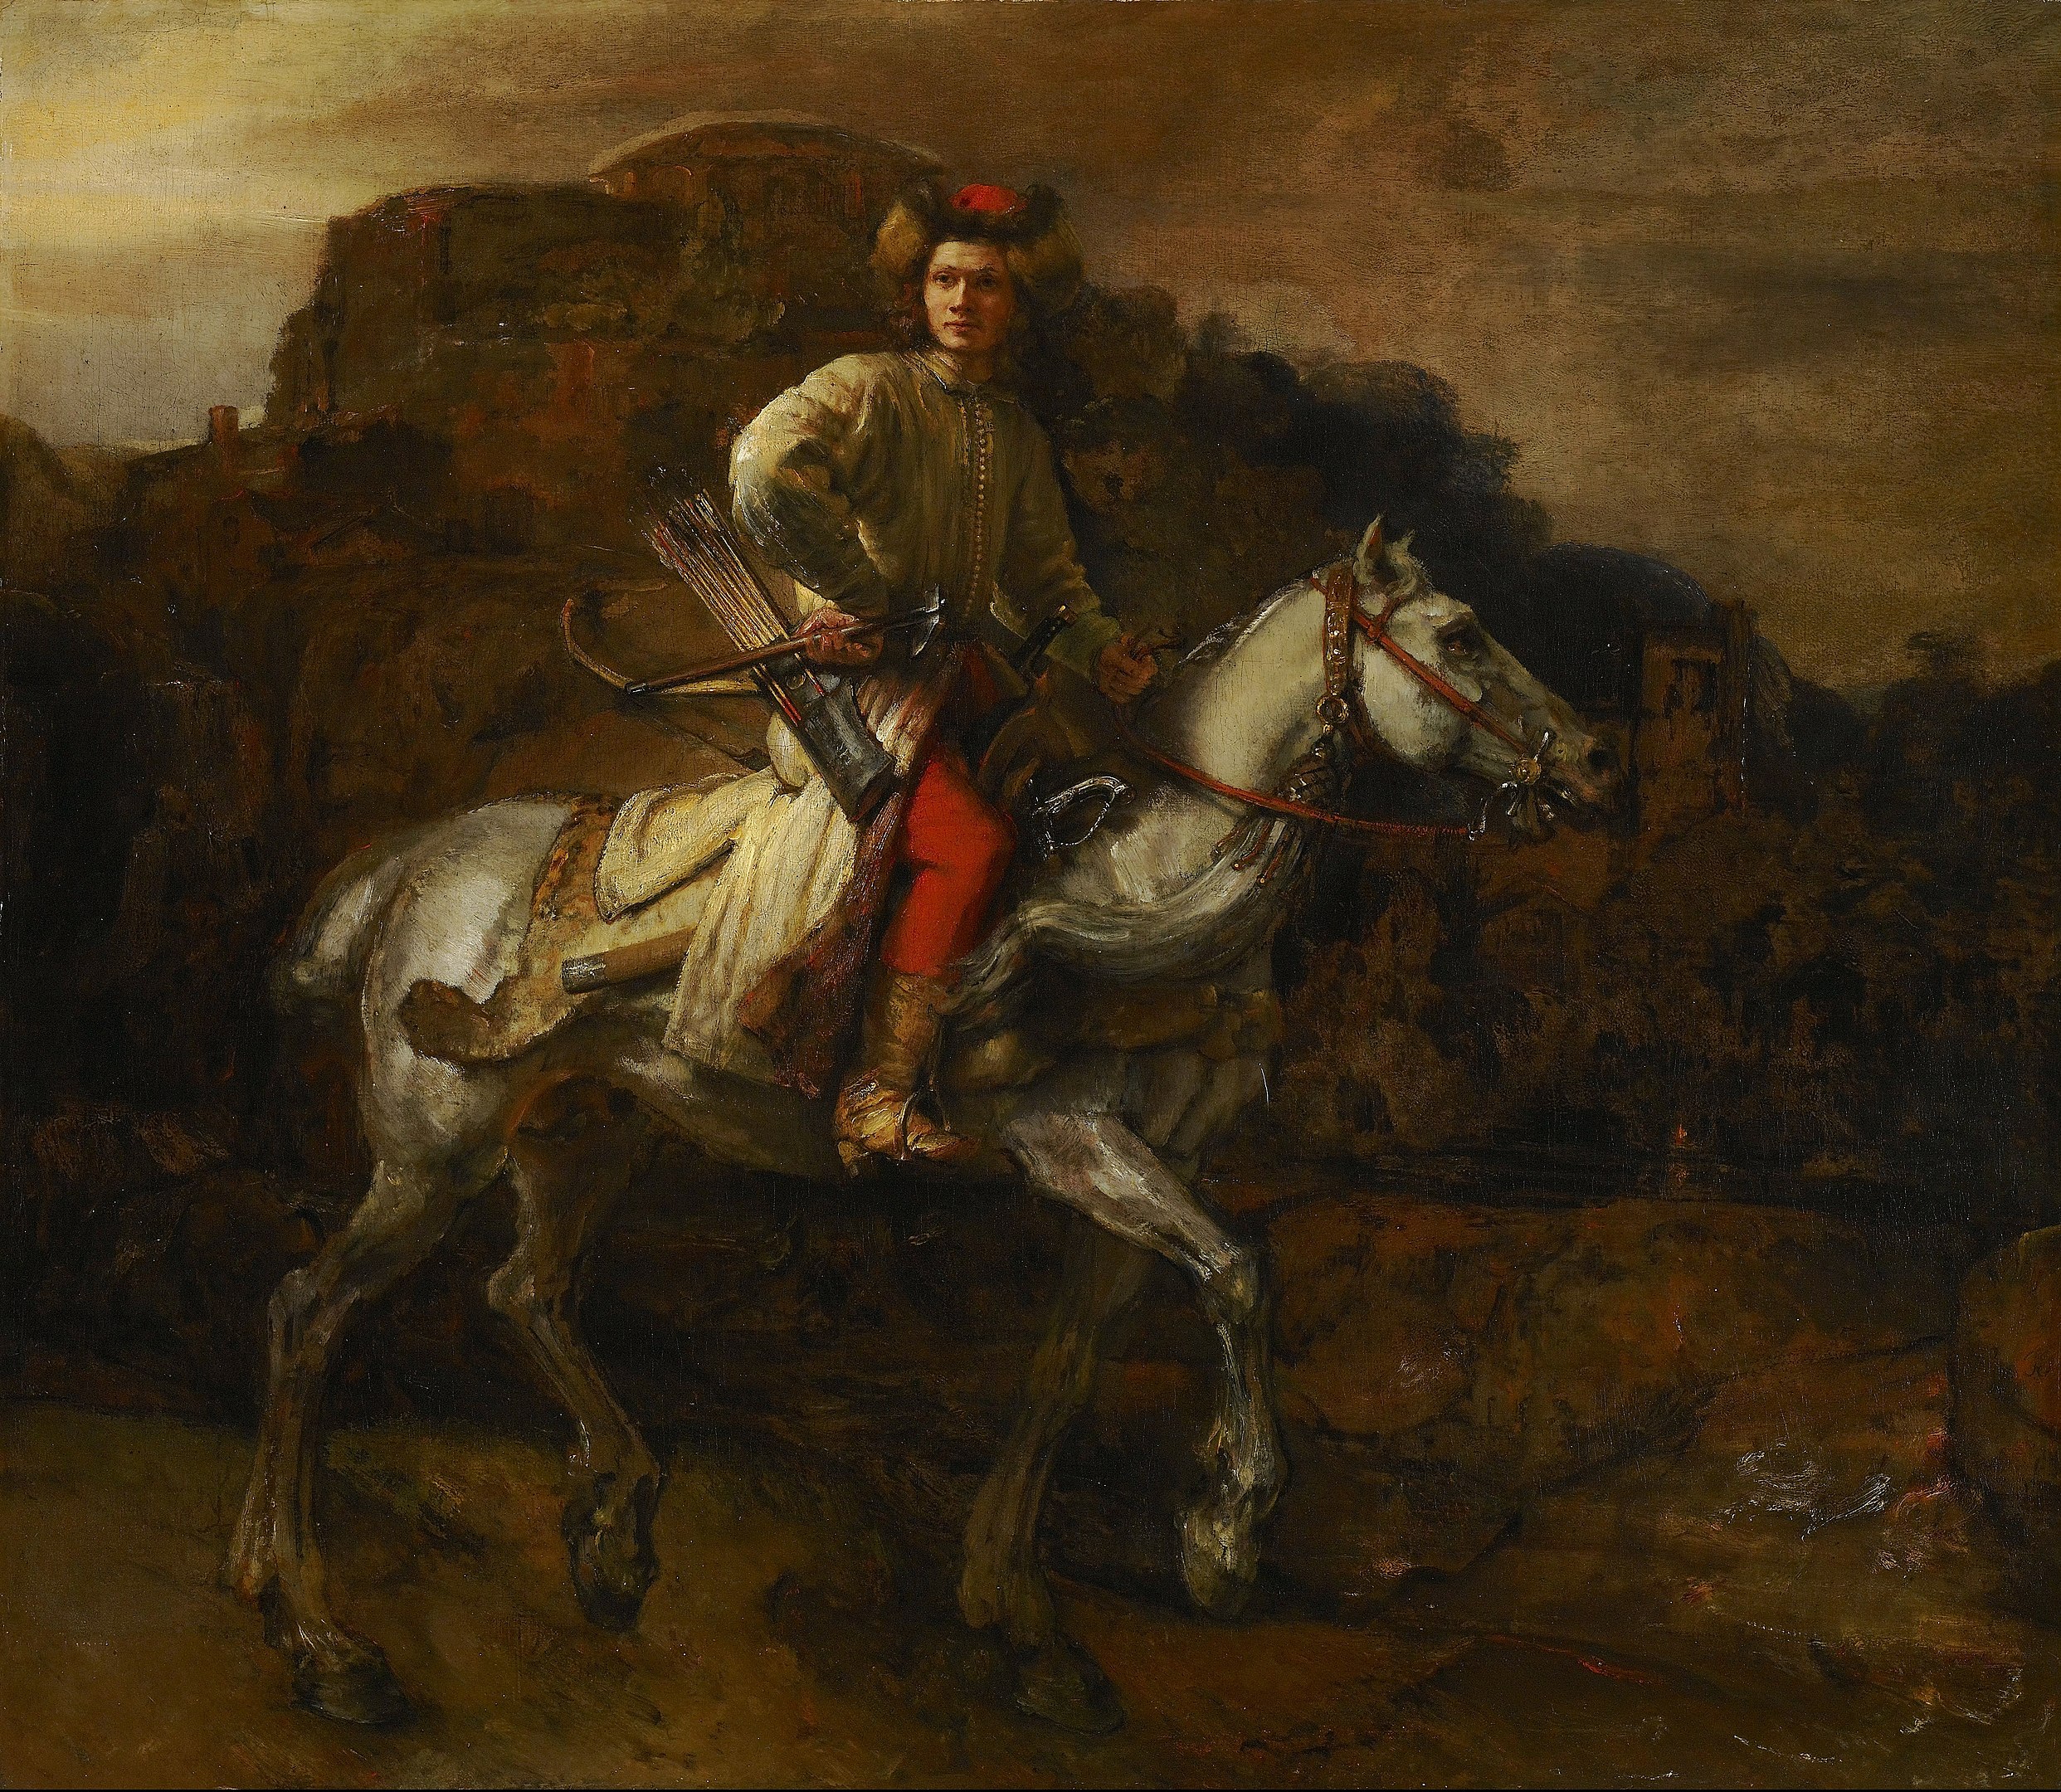 A man riding a horse in a dark landscape